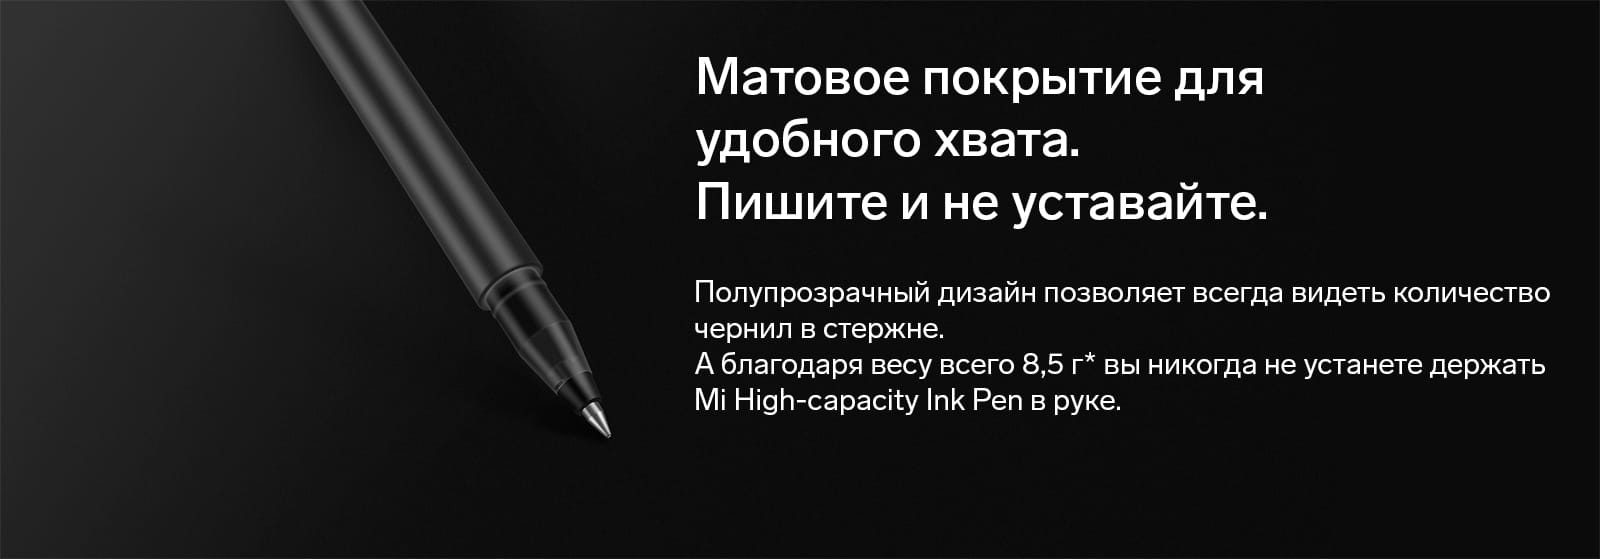  Mi High-capacity Ink Pen  